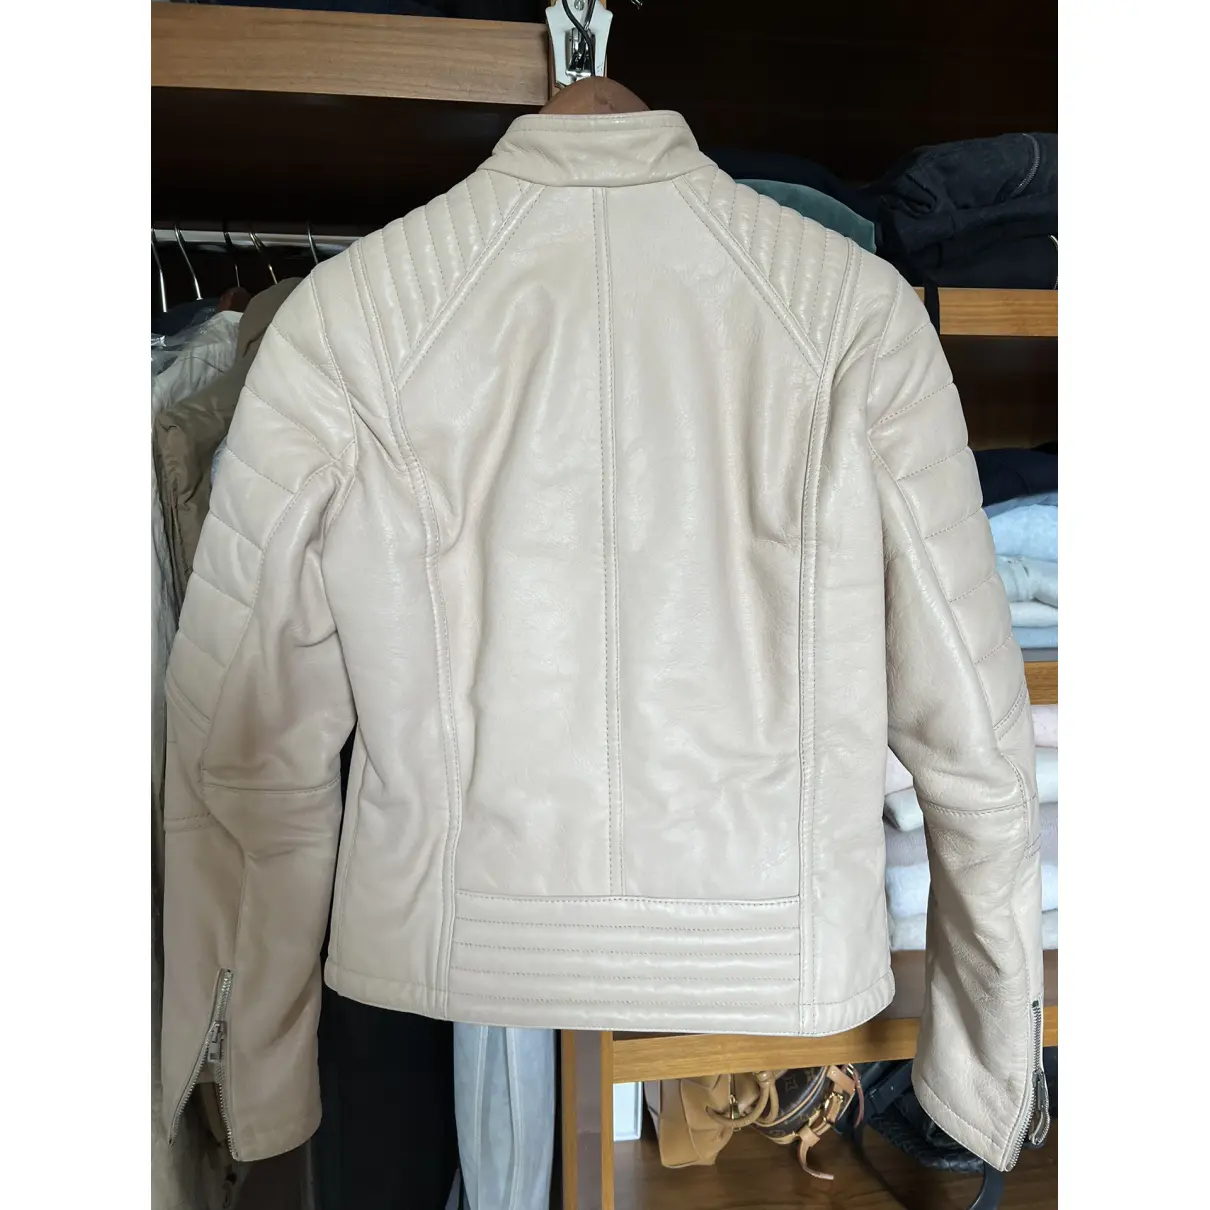 Buy Joseph Leather biker jacket online